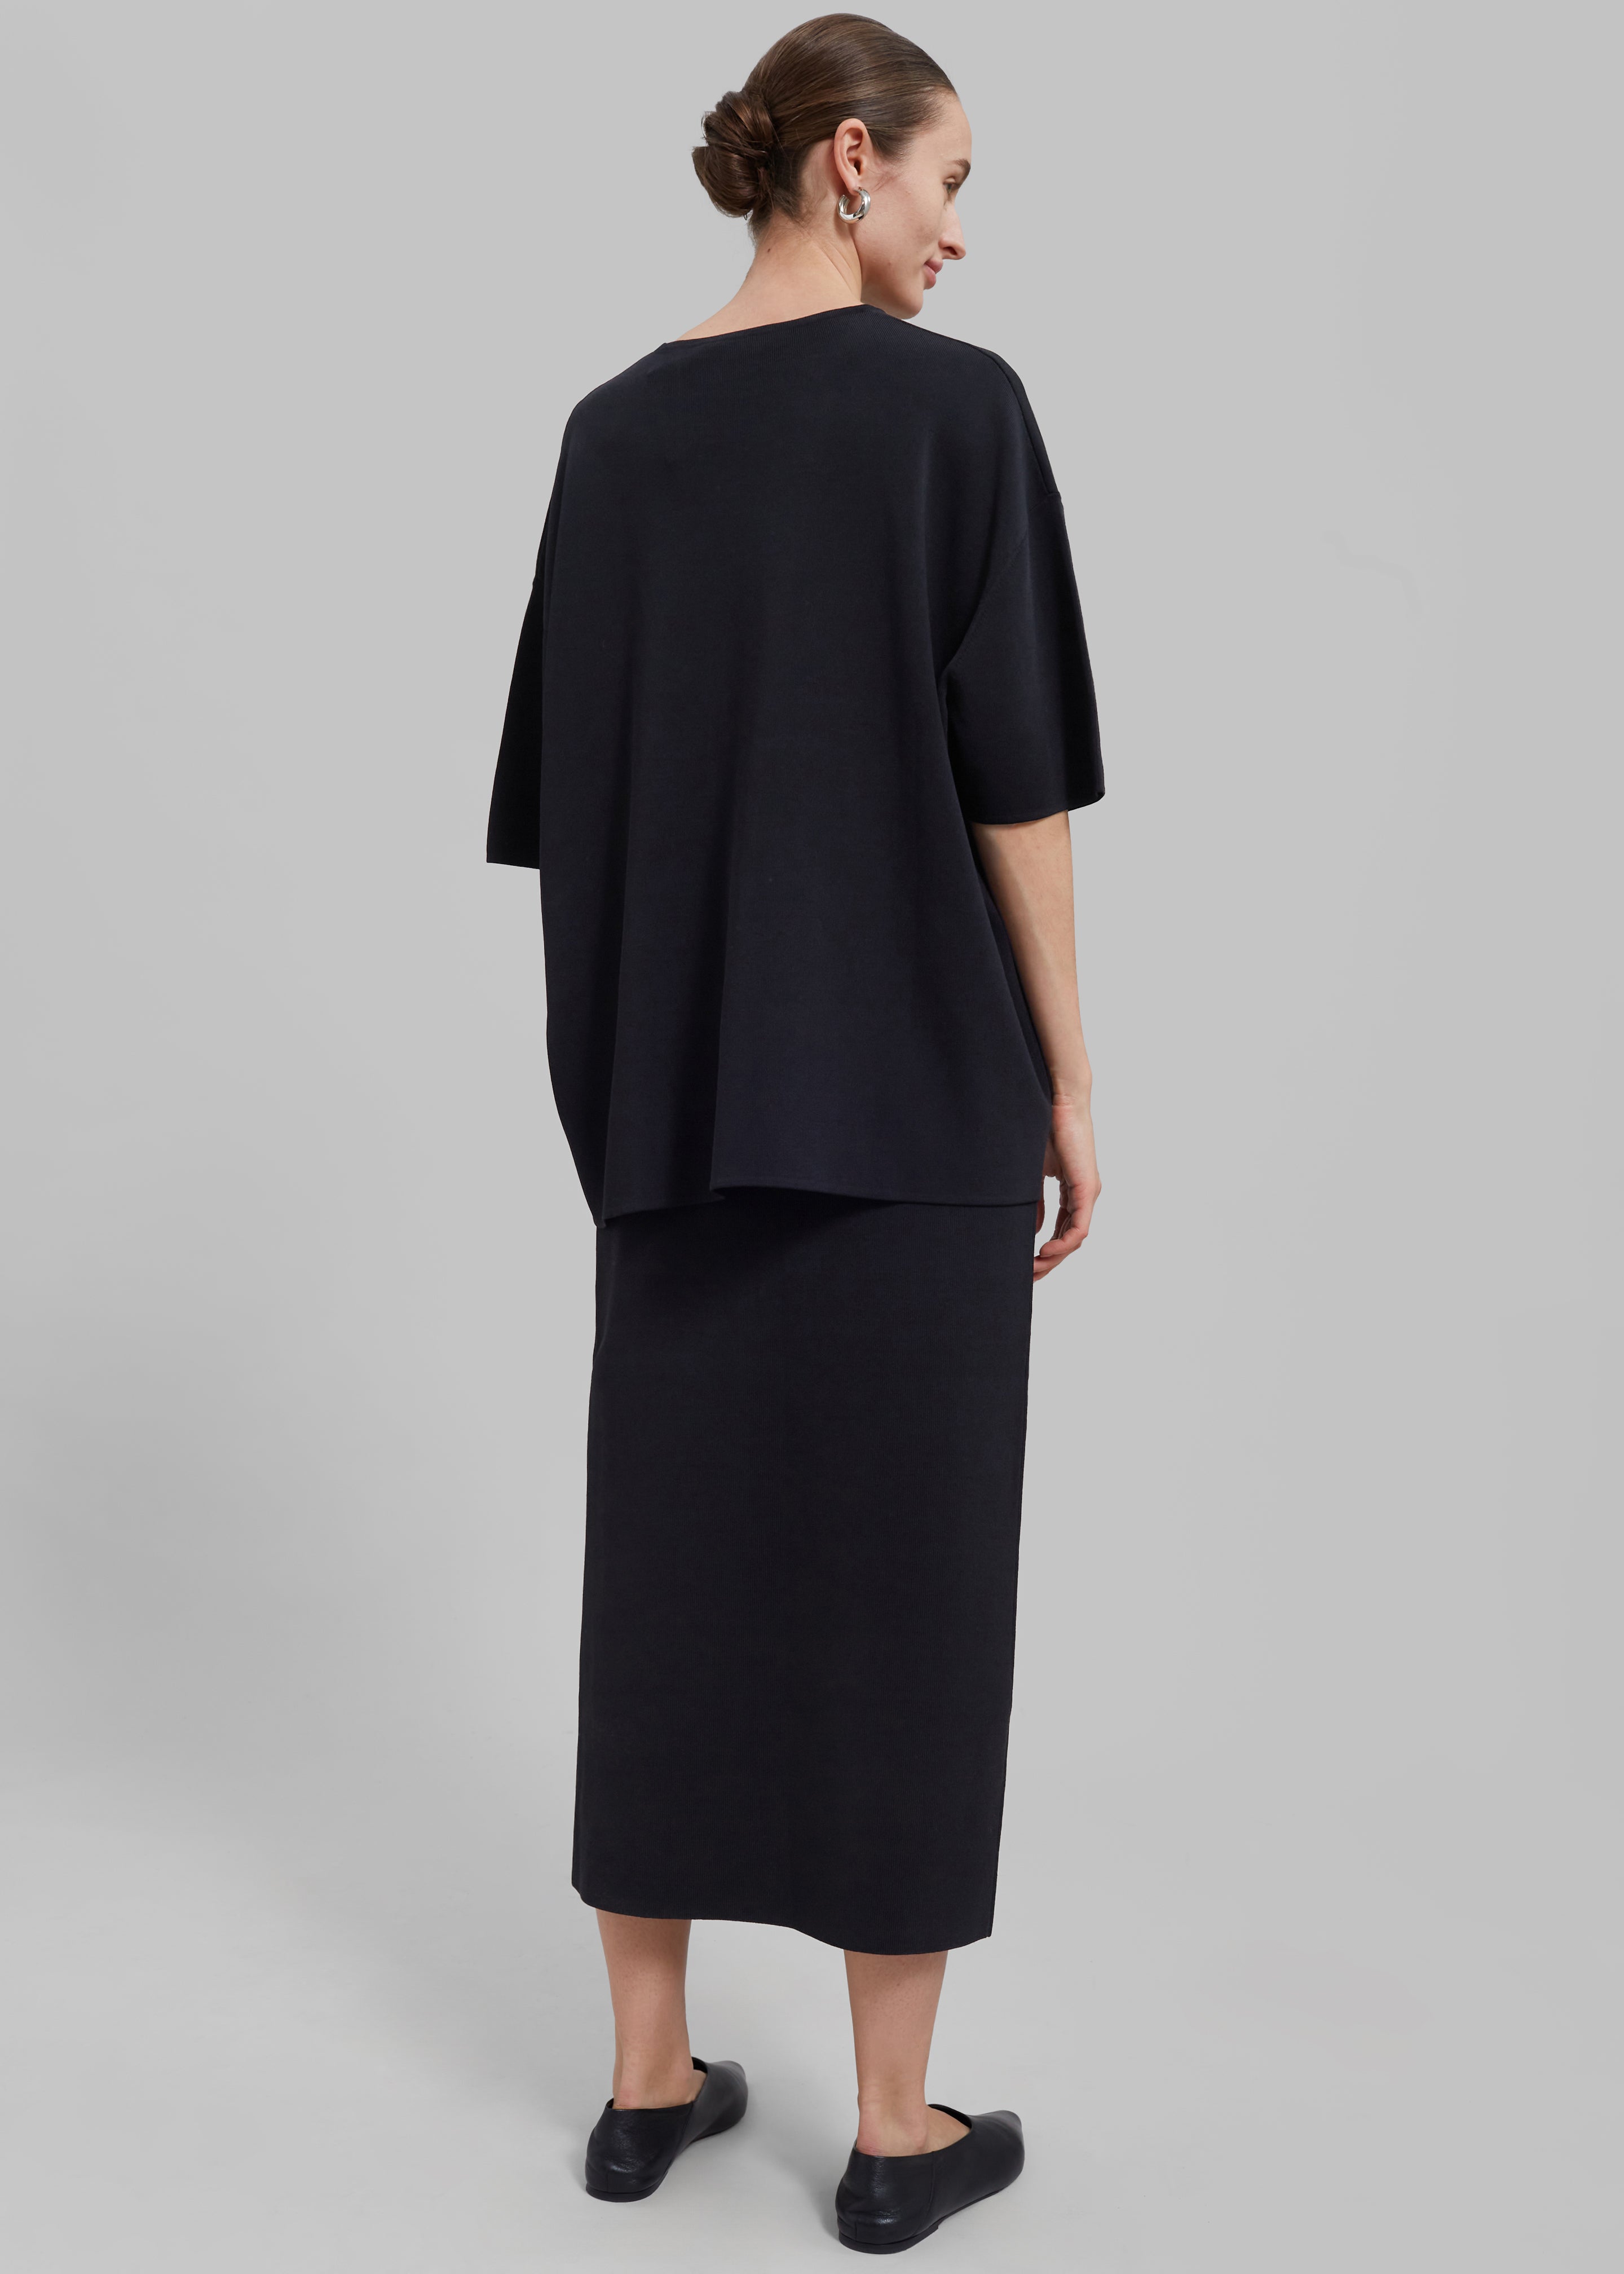 Solange Knit Pencil Skirt - Black - 9